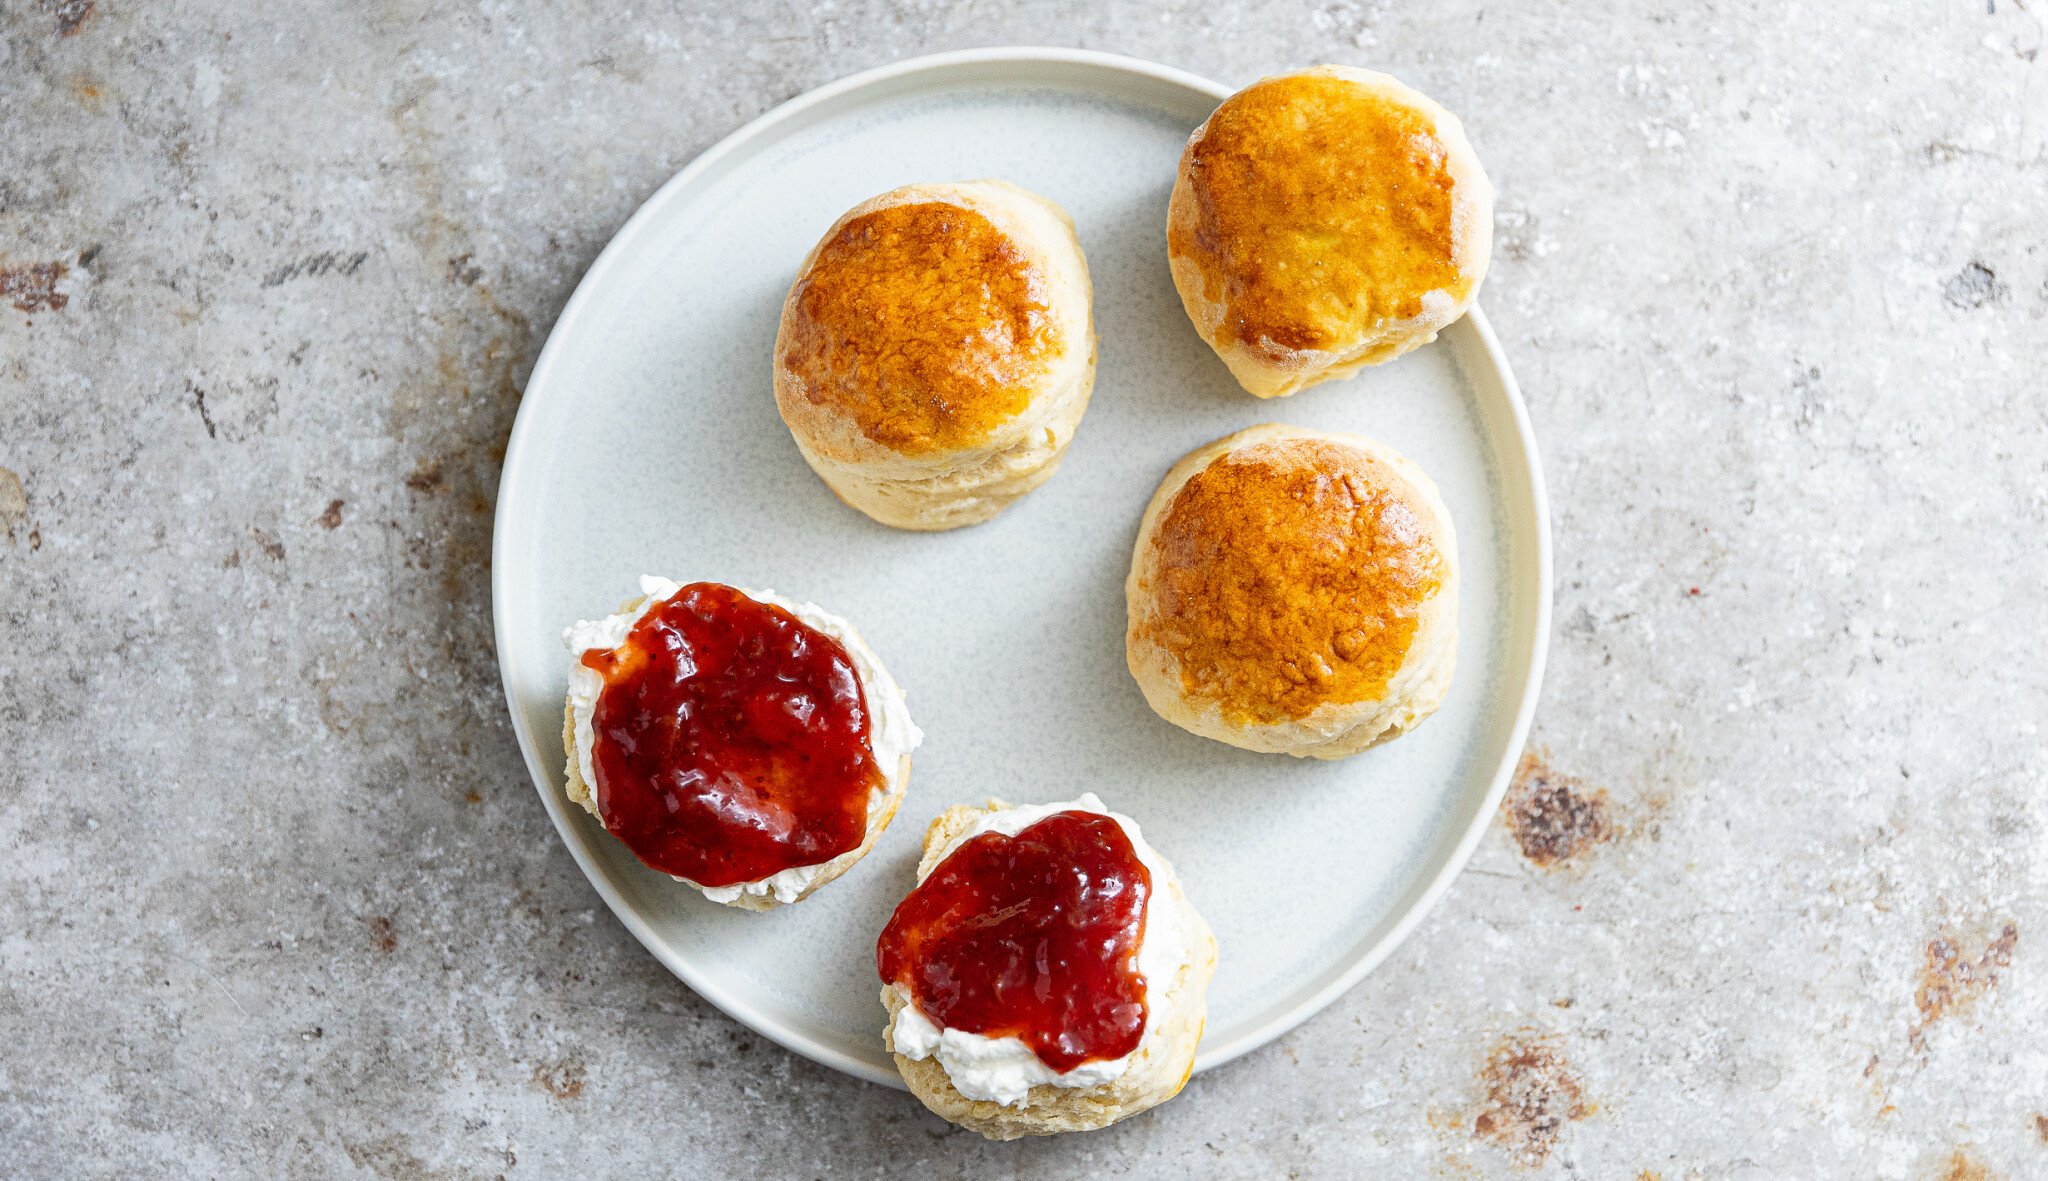 Cream tea aneb Anglické požitkářství v podobě scones s hustou smetanou & jahodovým džemem